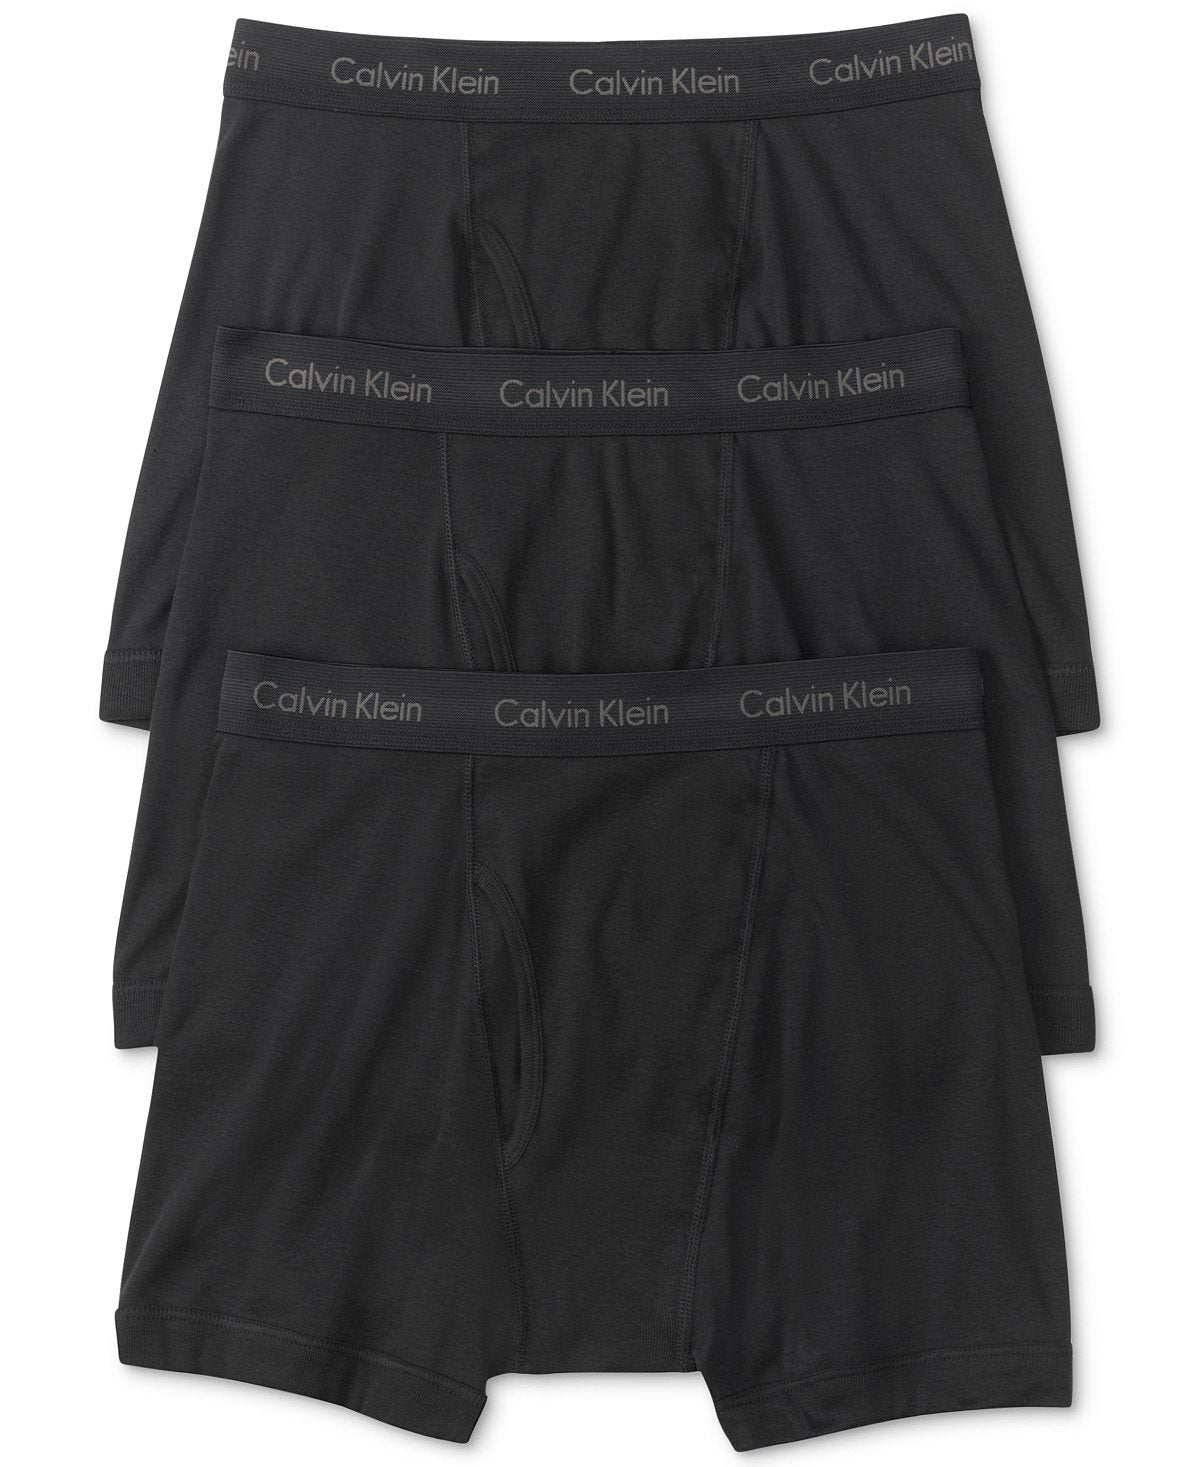 Calvin Klein Men's 100% Cotton Boxer Briefs, Black, White, Grey Heather, S  at  Men's Clothing store